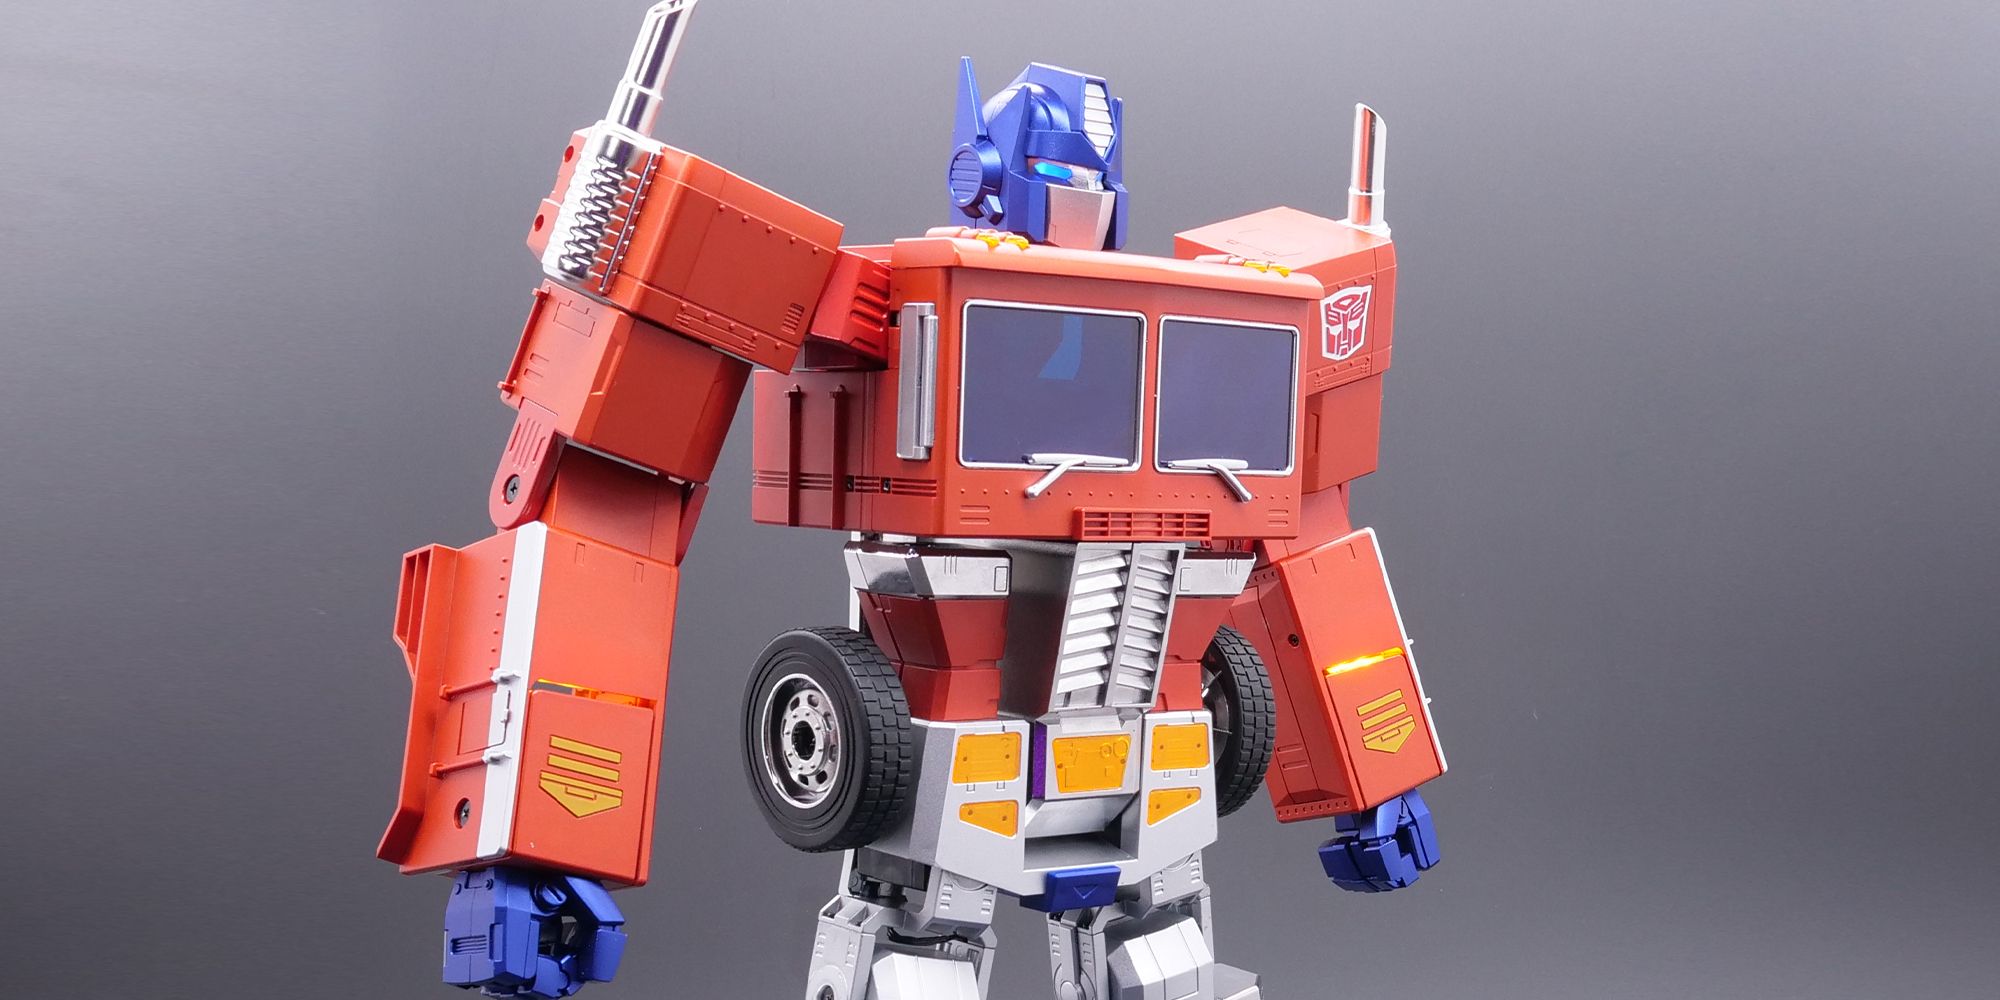 Hasbro's Transformers Optimus Prime Robot Horizontal.